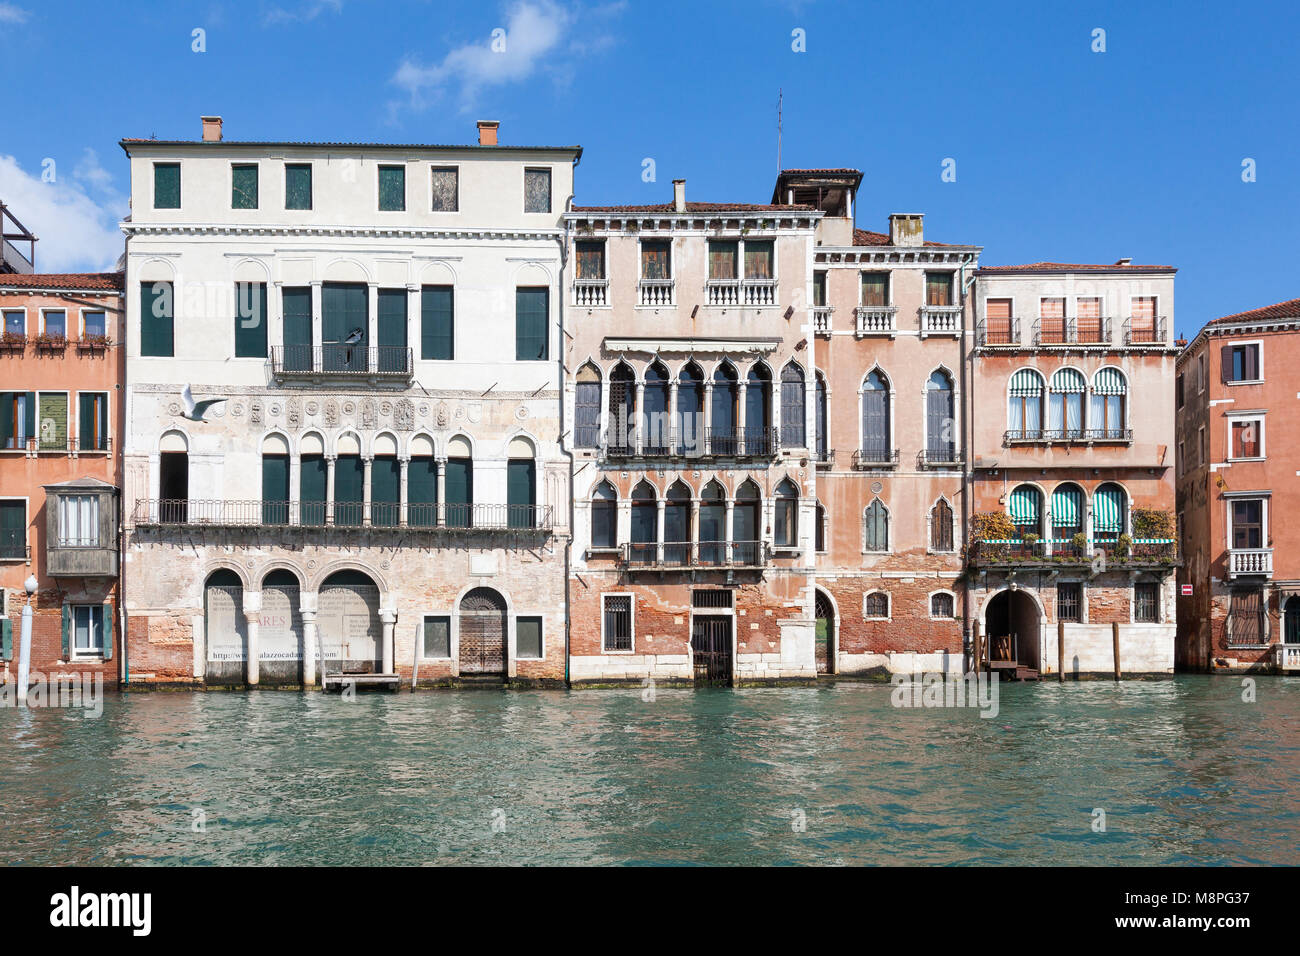 Ca' a Mosto, der älteste Palast auf dem Canal Grande, Casa Dolfin, Palazzo Bollani Erizzo, Grand Canal, Santa Croce, Venedig, Venetien, Italien Stockfoto